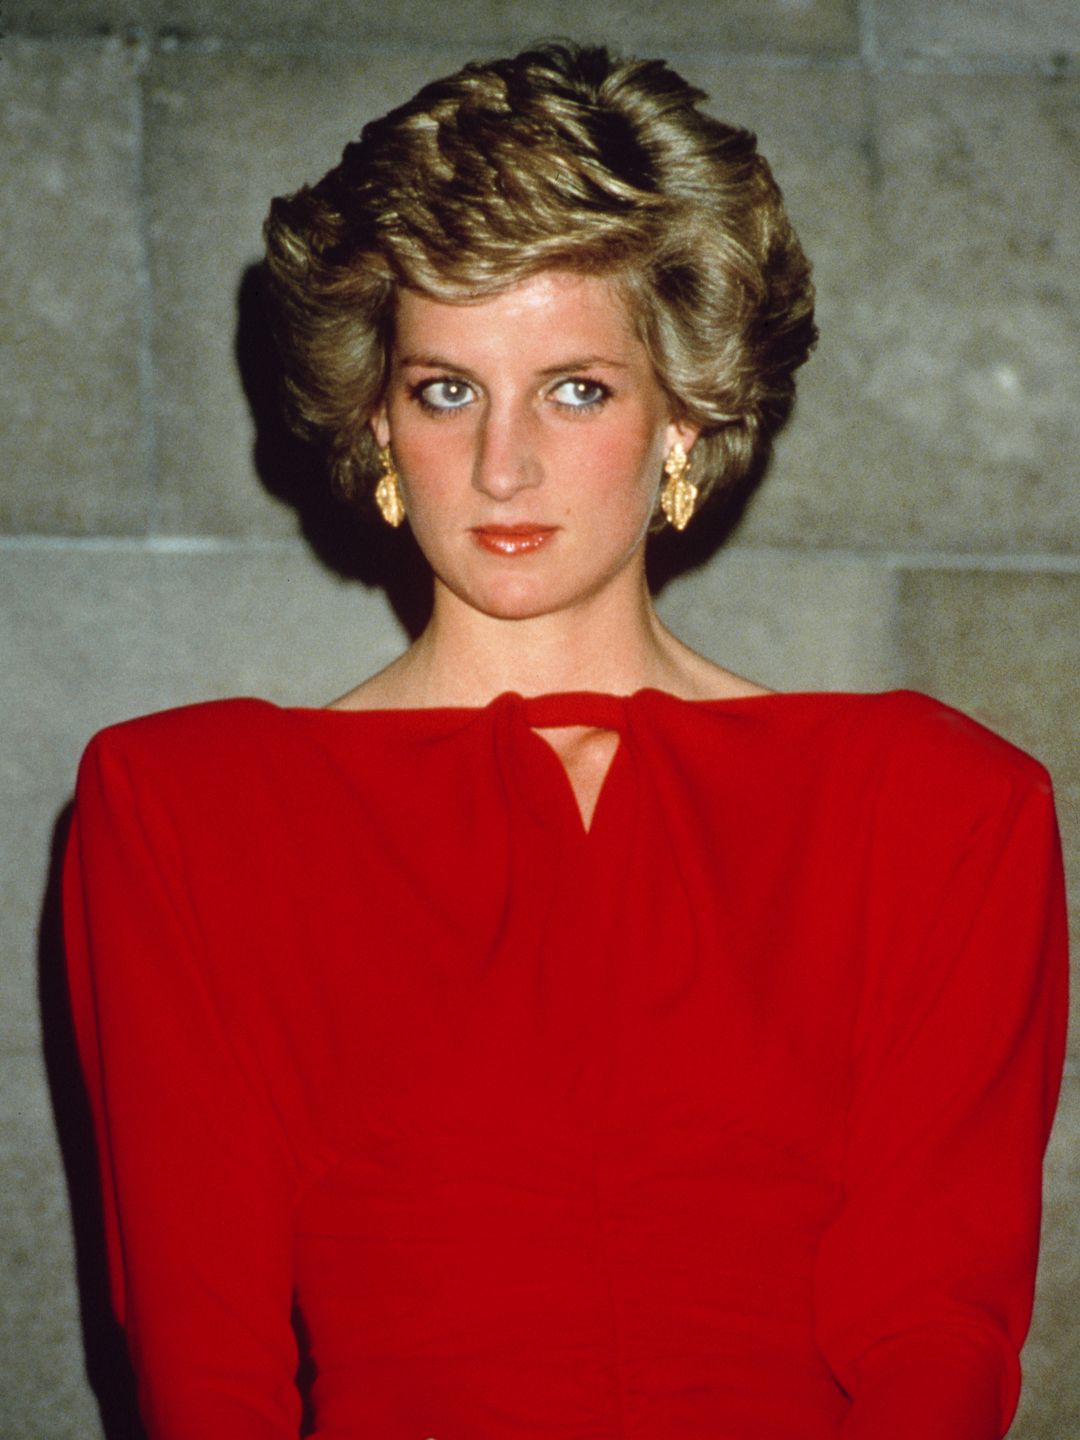 Princess Diana wearing a red shoulder pad dress